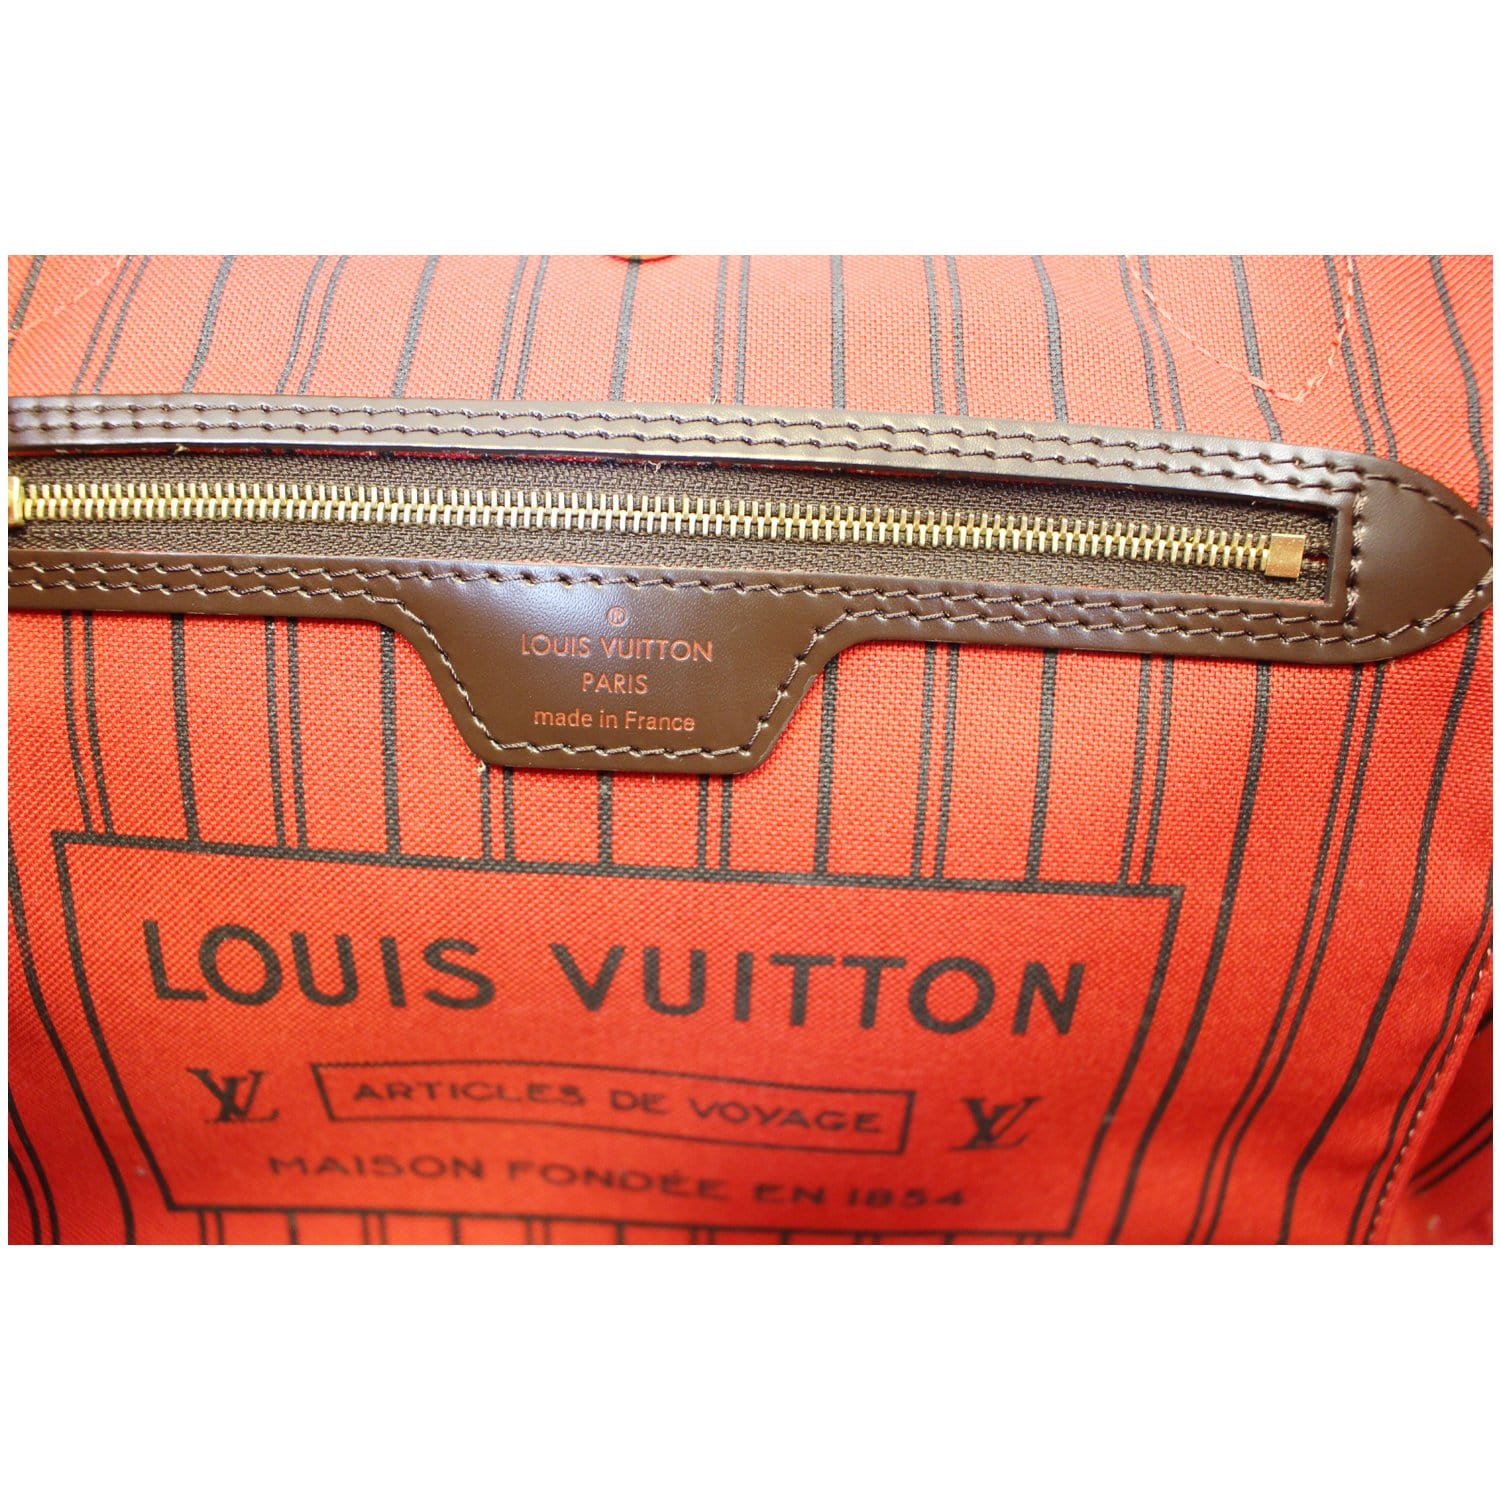 Neverfull PM Damier Ebene - Handbags, LOUIS VUITTON ®